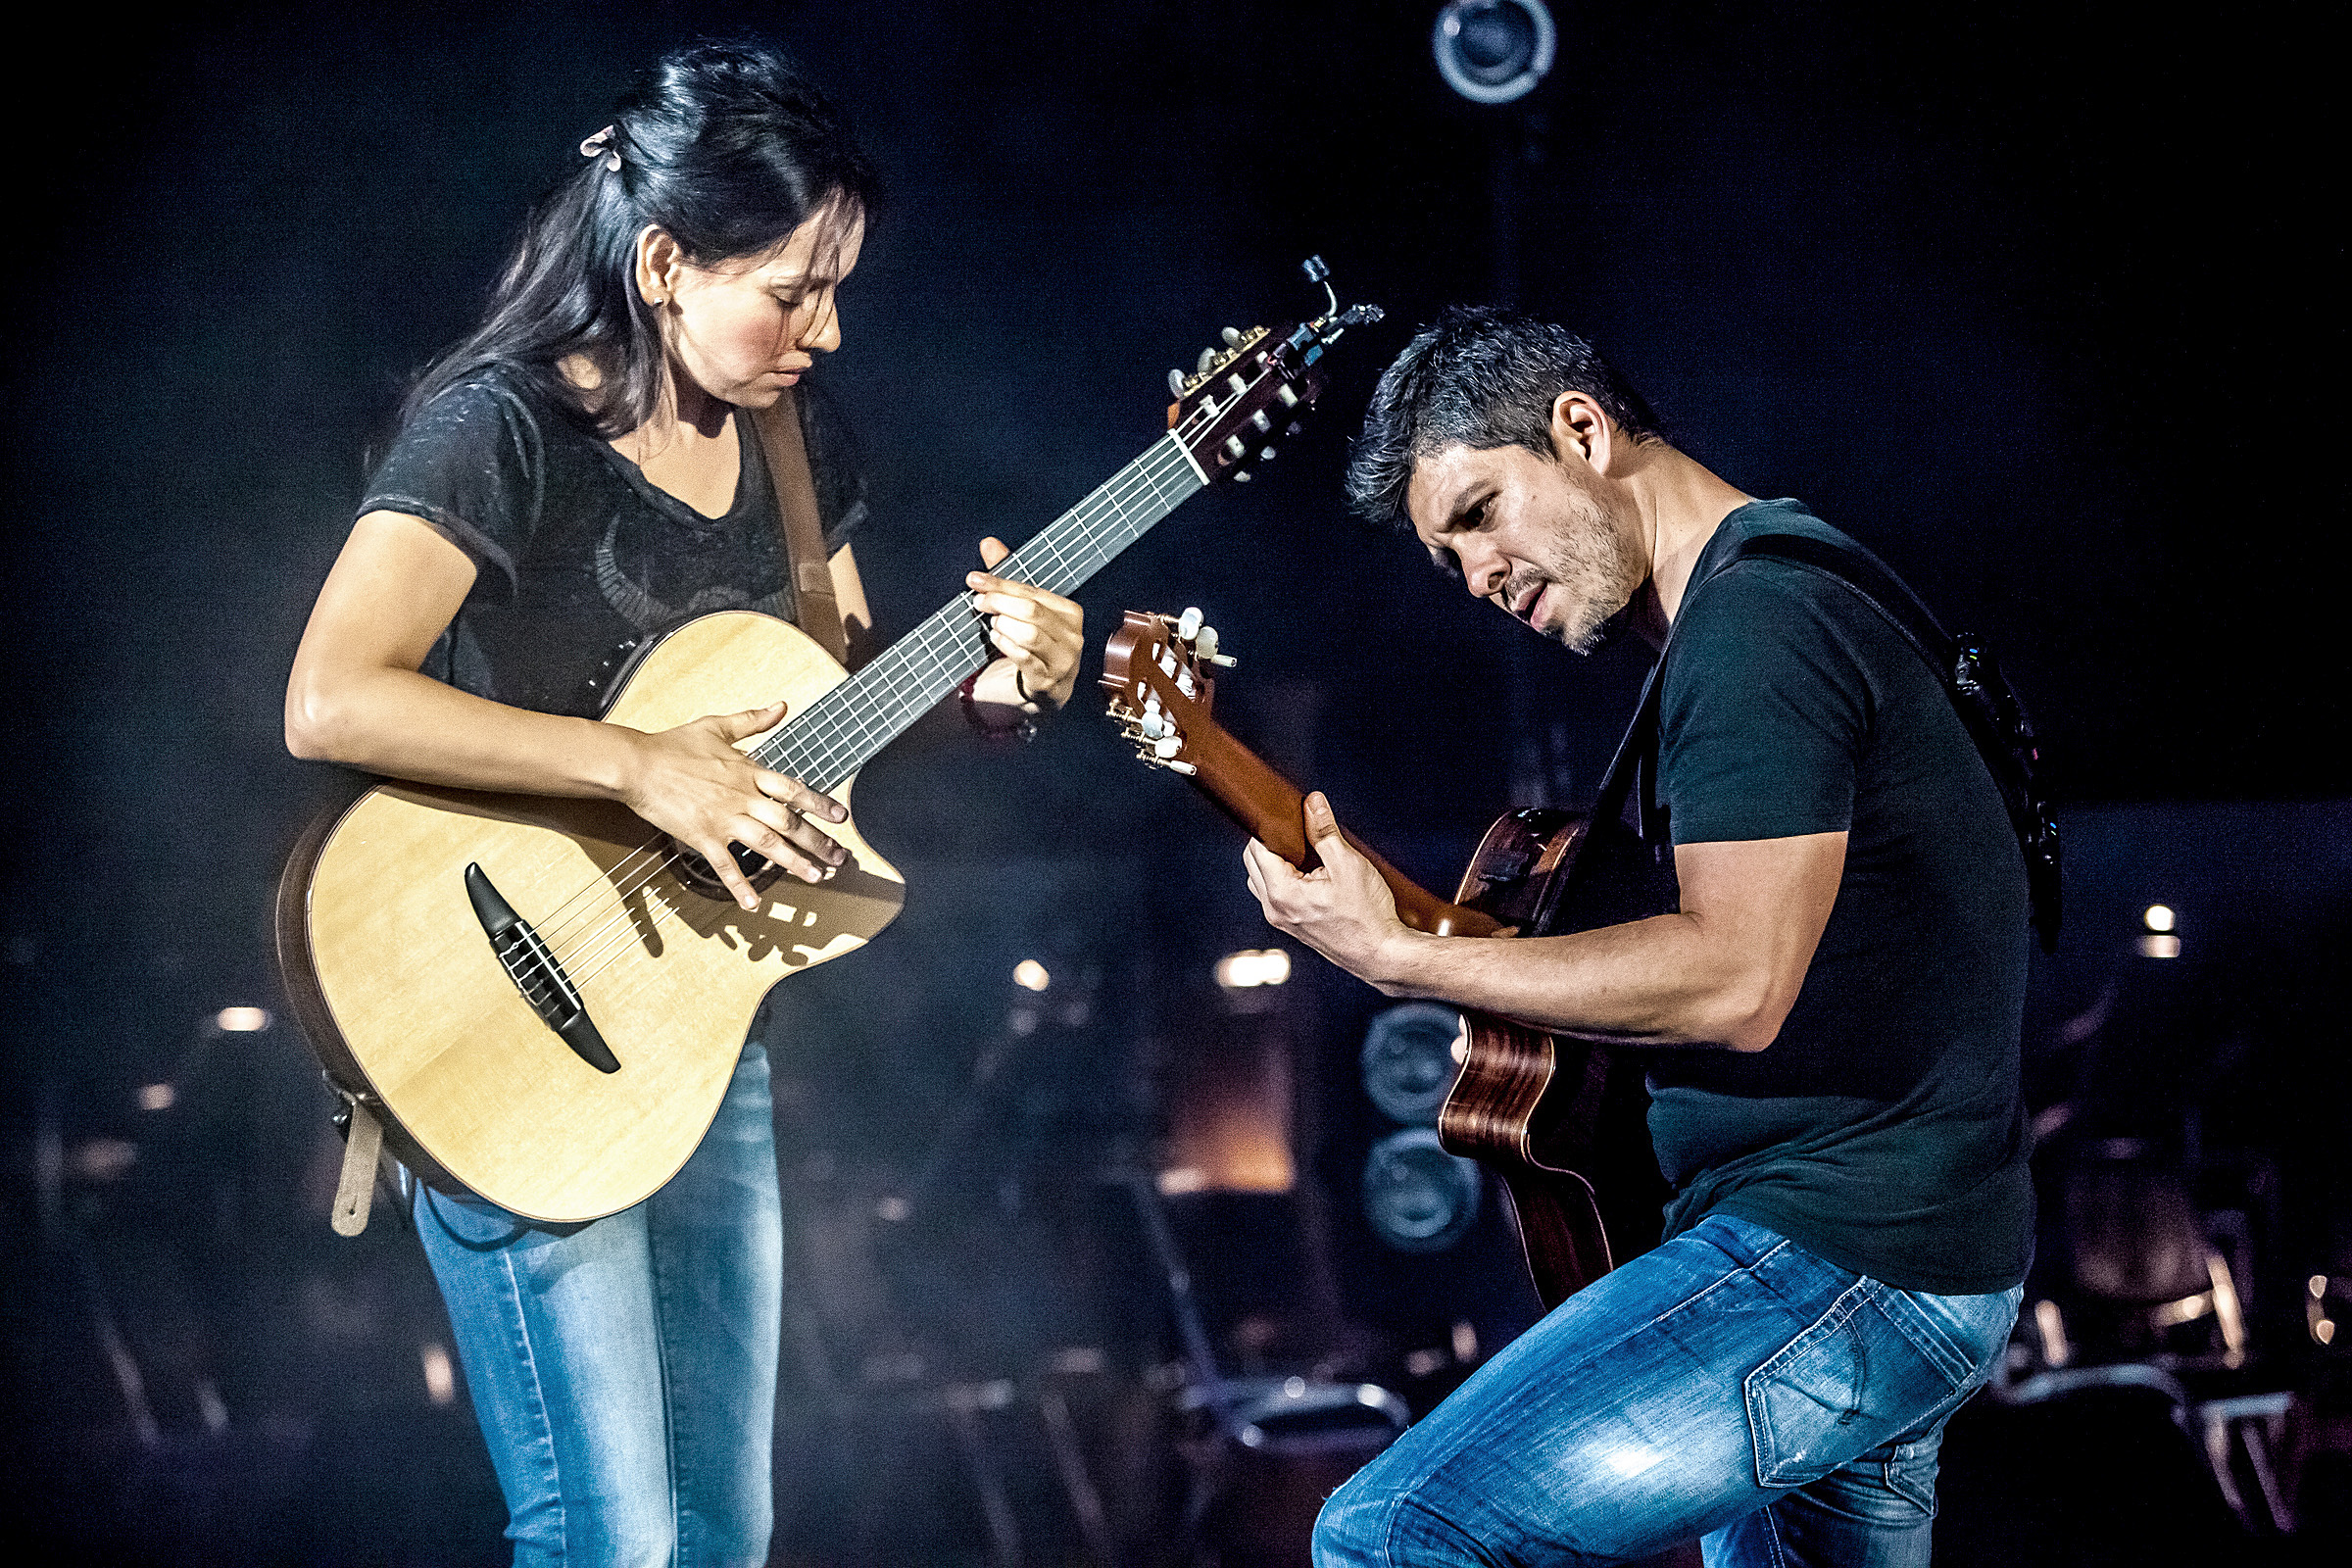 Rodrigo y Gabriela Sunday, May 11 Rodrigo y Gabriela’s guitar-strumming genius defies